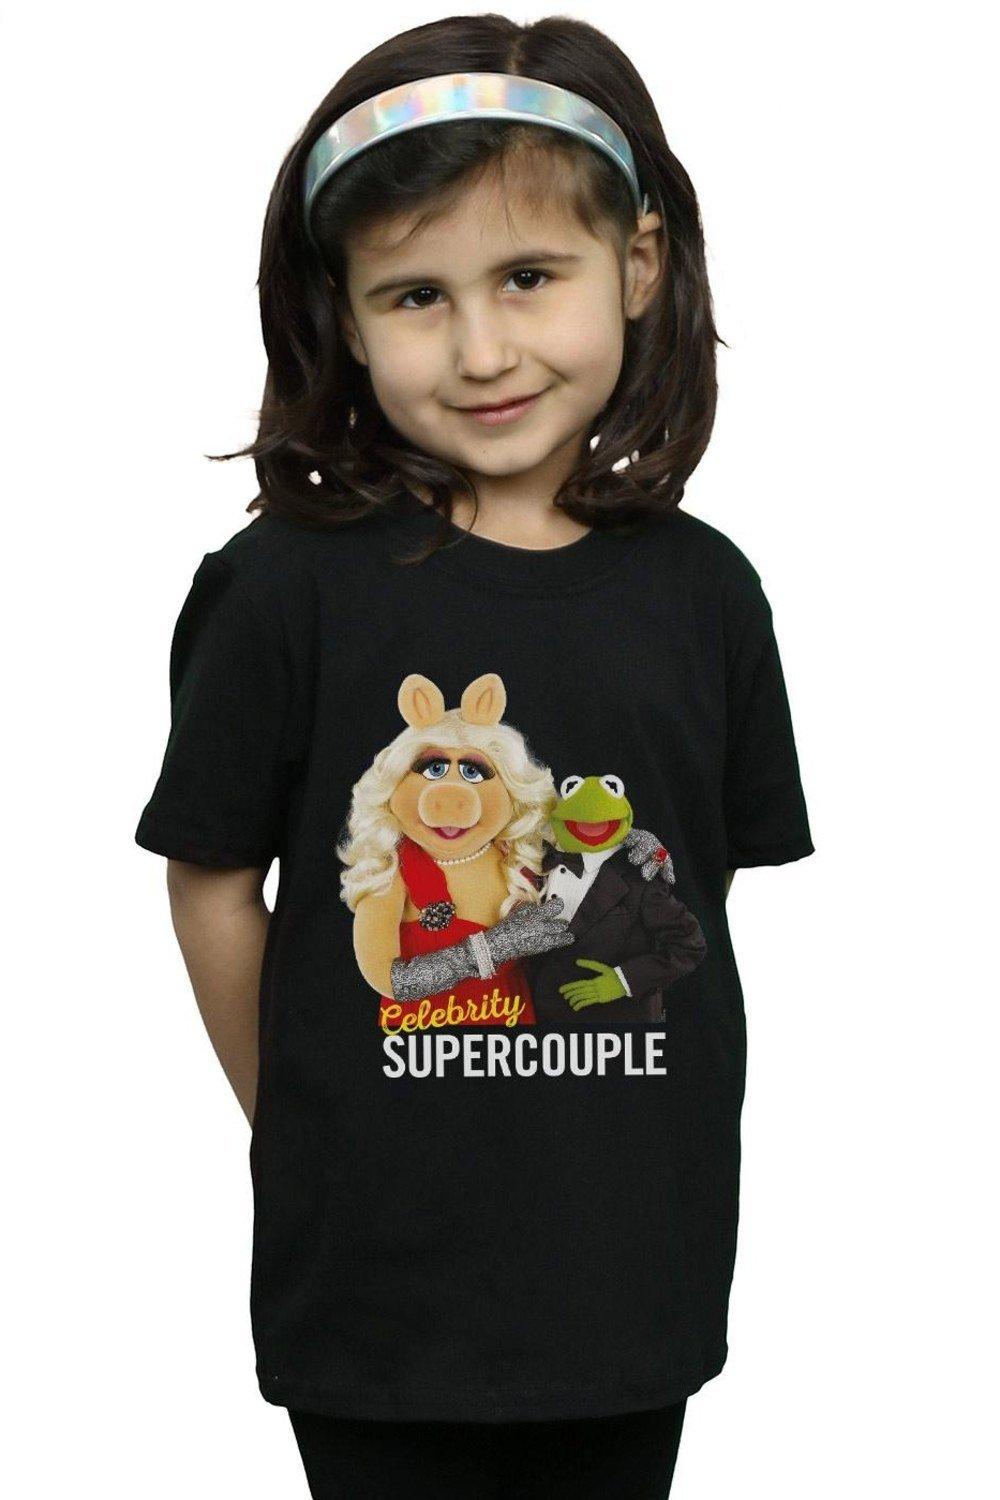 The Muppets Celebrity Supercouple Cotton T-Shirt